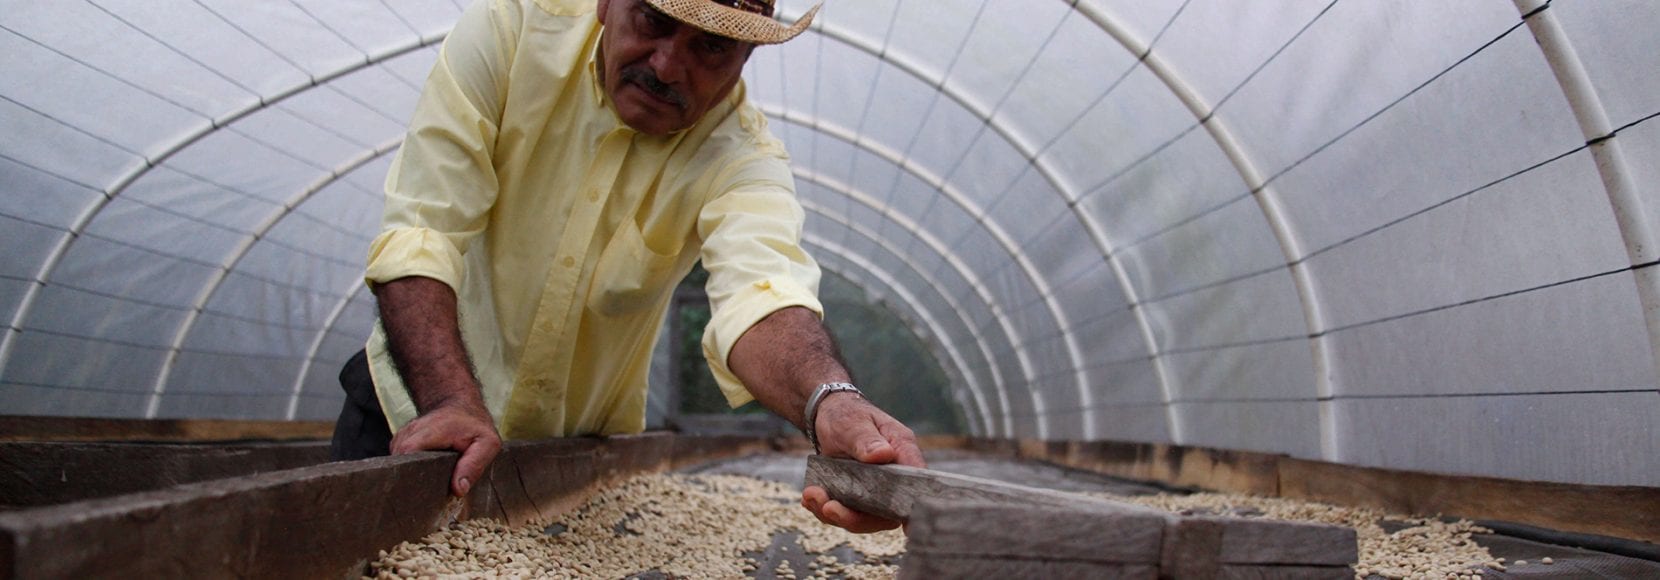 Man in Honduras raking coffee beans